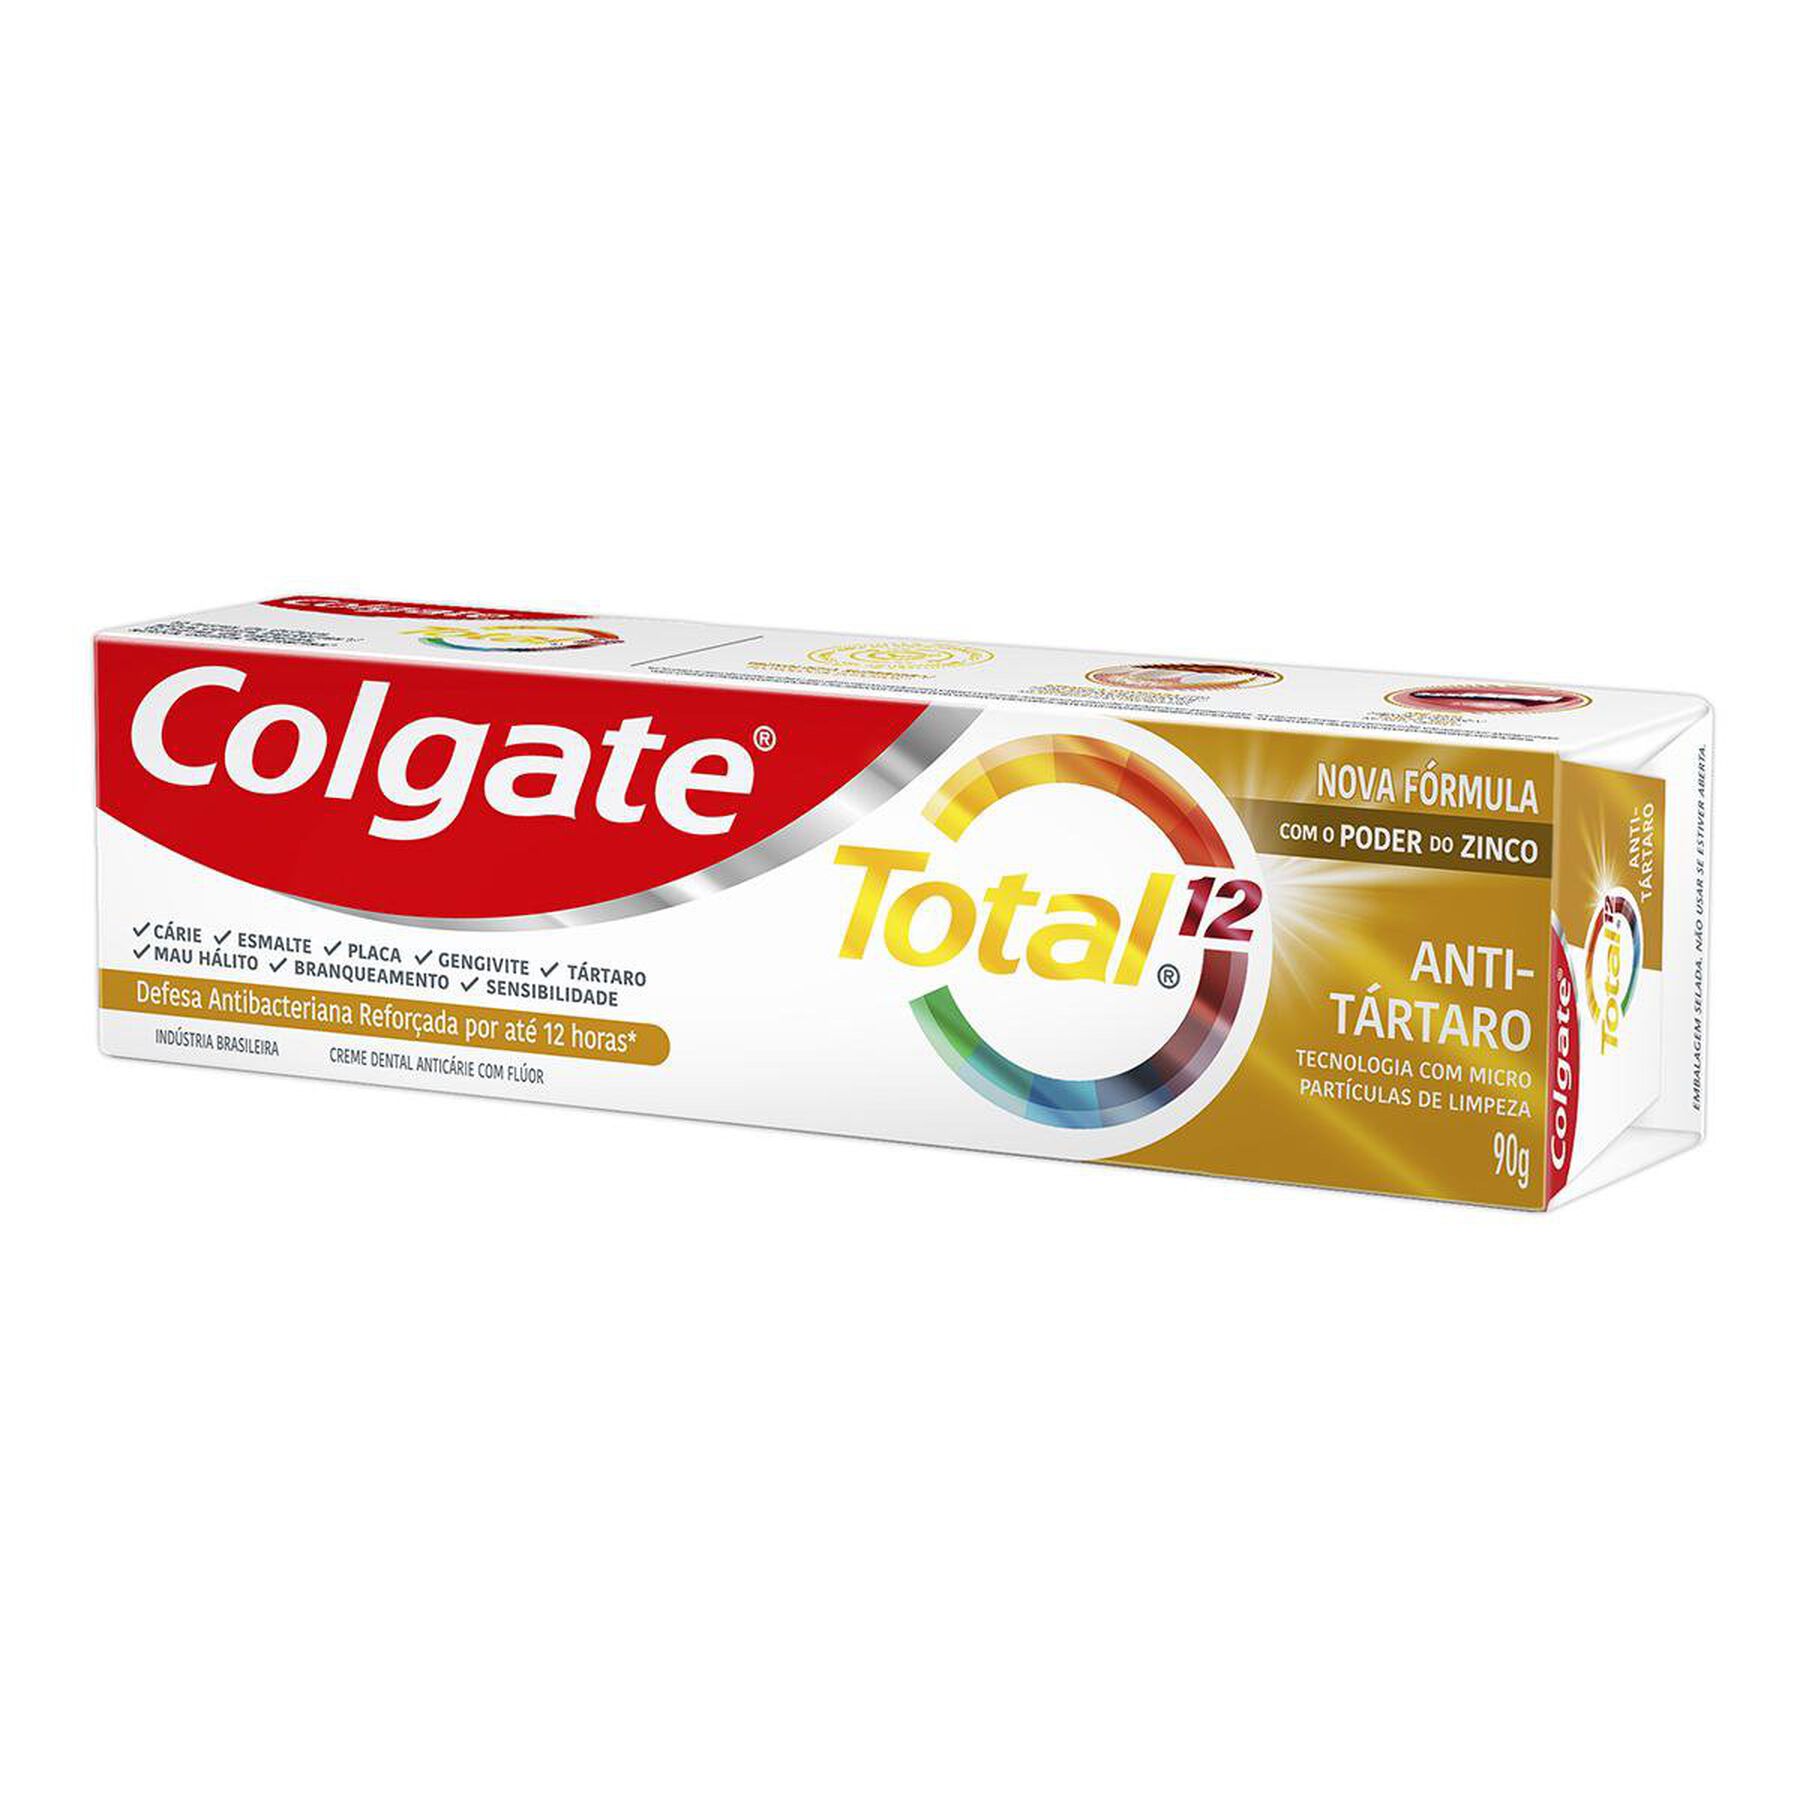 Creme Dental Colgate Total 12 Anti Tártaro 3 unid 90g Preço Especial